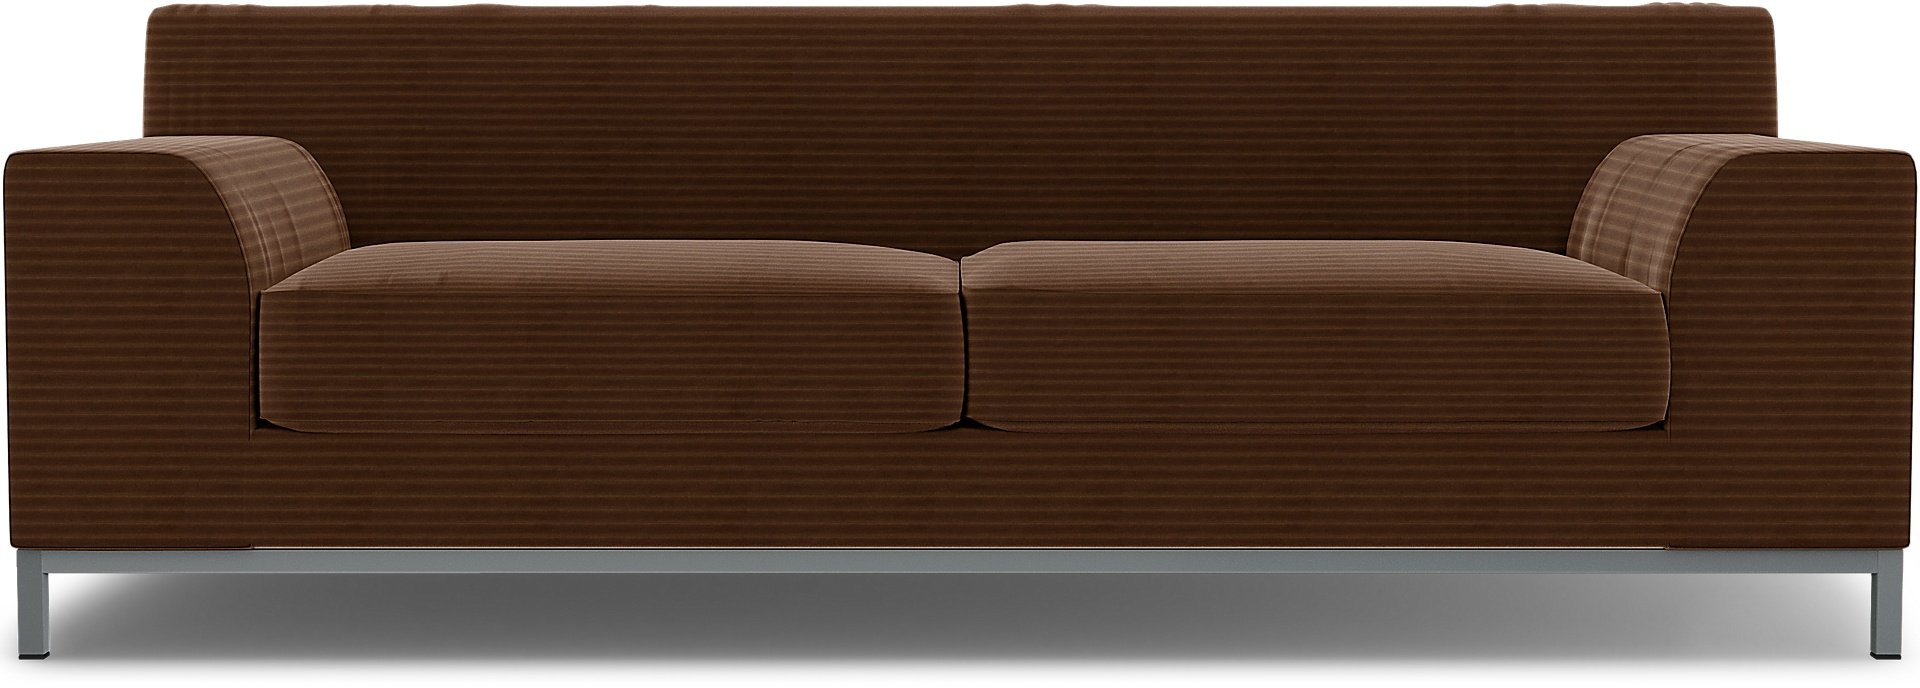 IKEA - Kramfors 3 Seater Sofa Cover, Chocolate Brown, Corduroy - Bemz